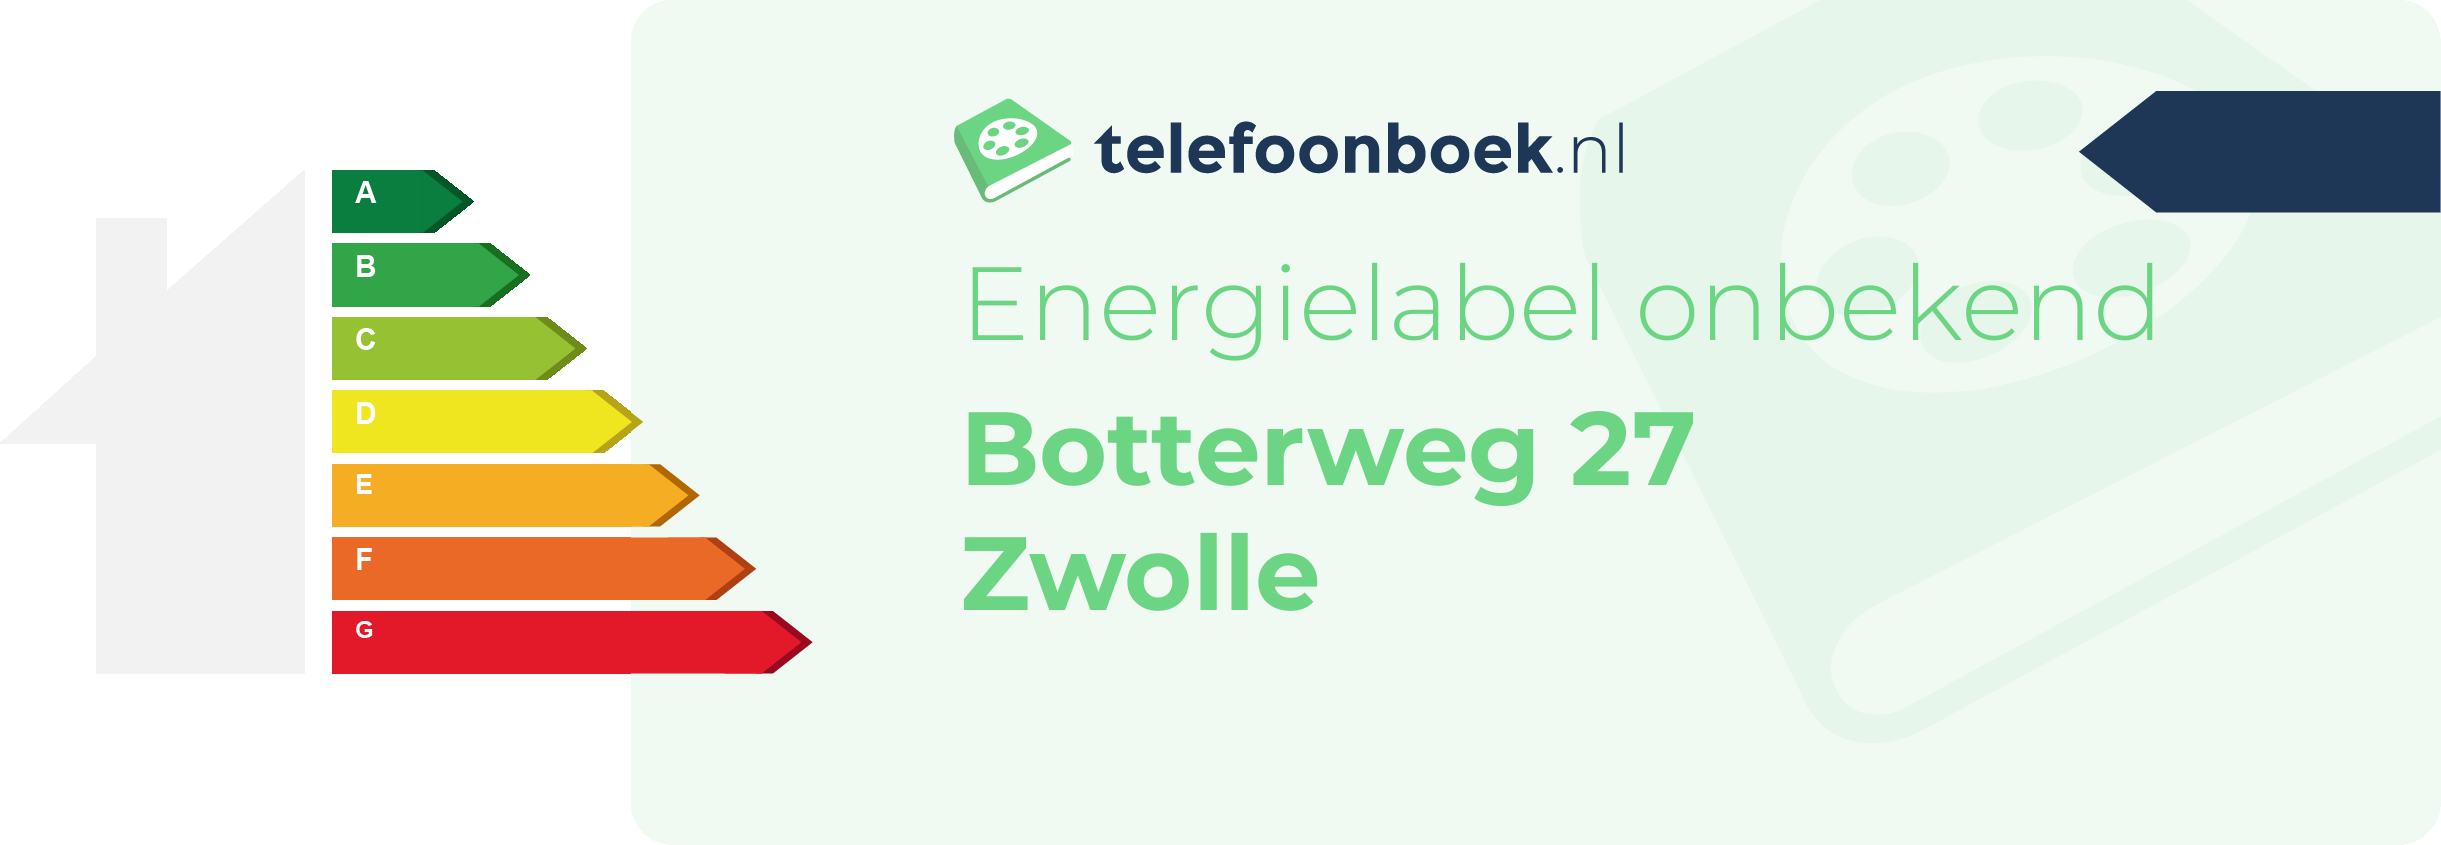 Energielabel Botterweg 27 Zwolle